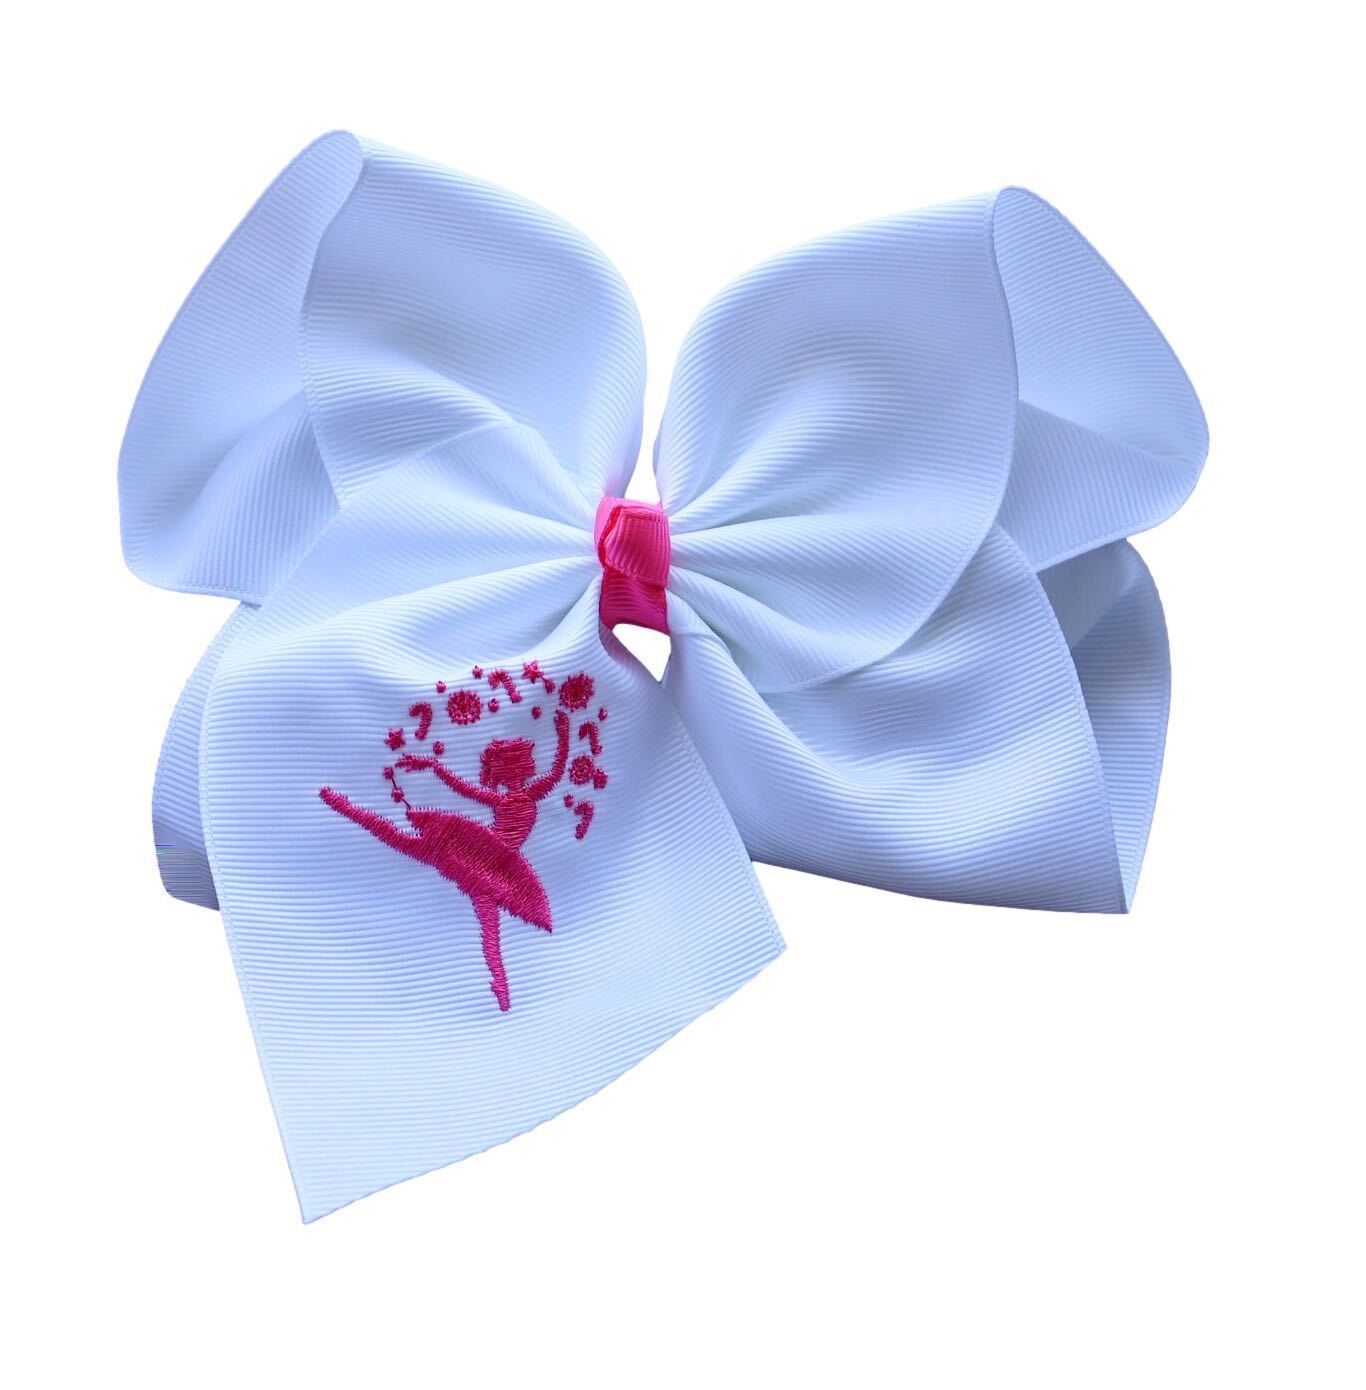 Sugar Plum Fairy Embroidered Bow